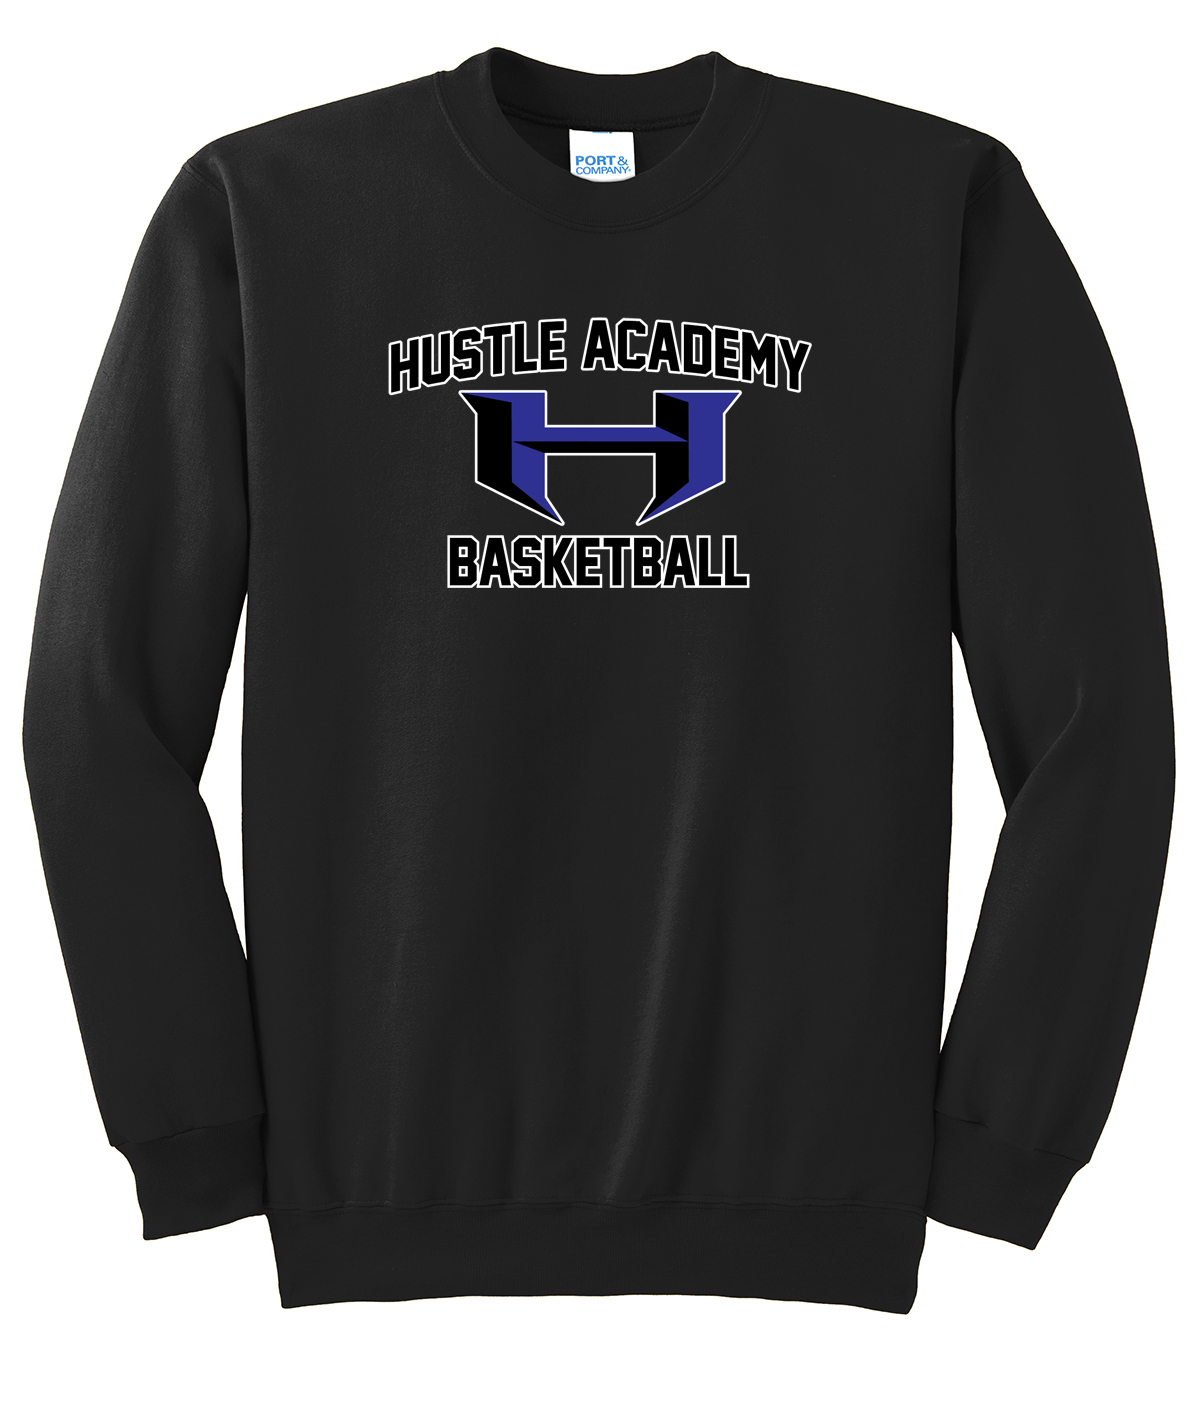 Hustle Academy Basketball Crew Neck Sweater